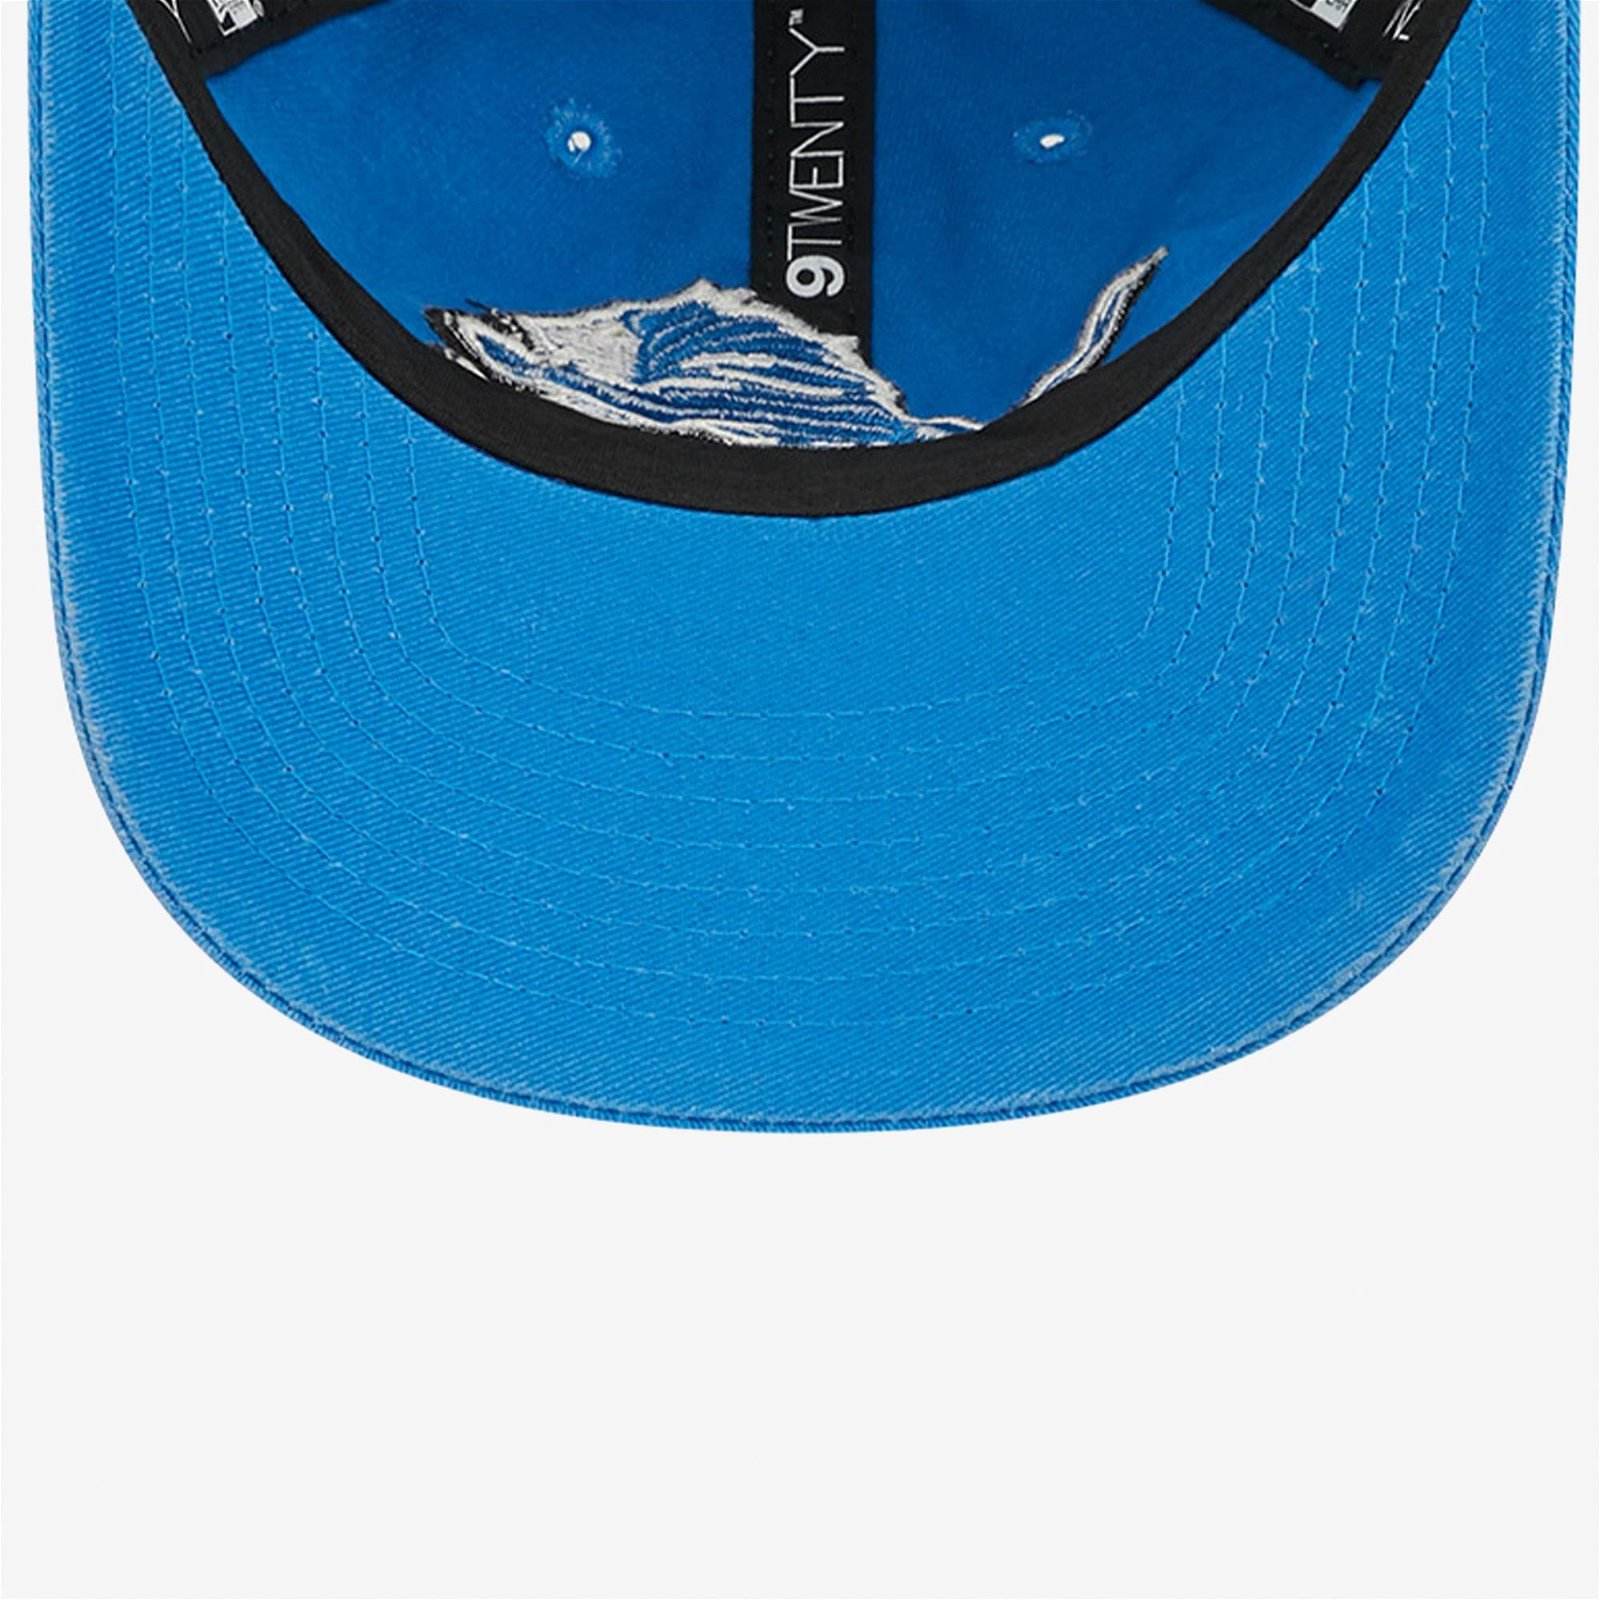 New Era Detroit Lions NFL Sideline Unisex Mavi Şapka